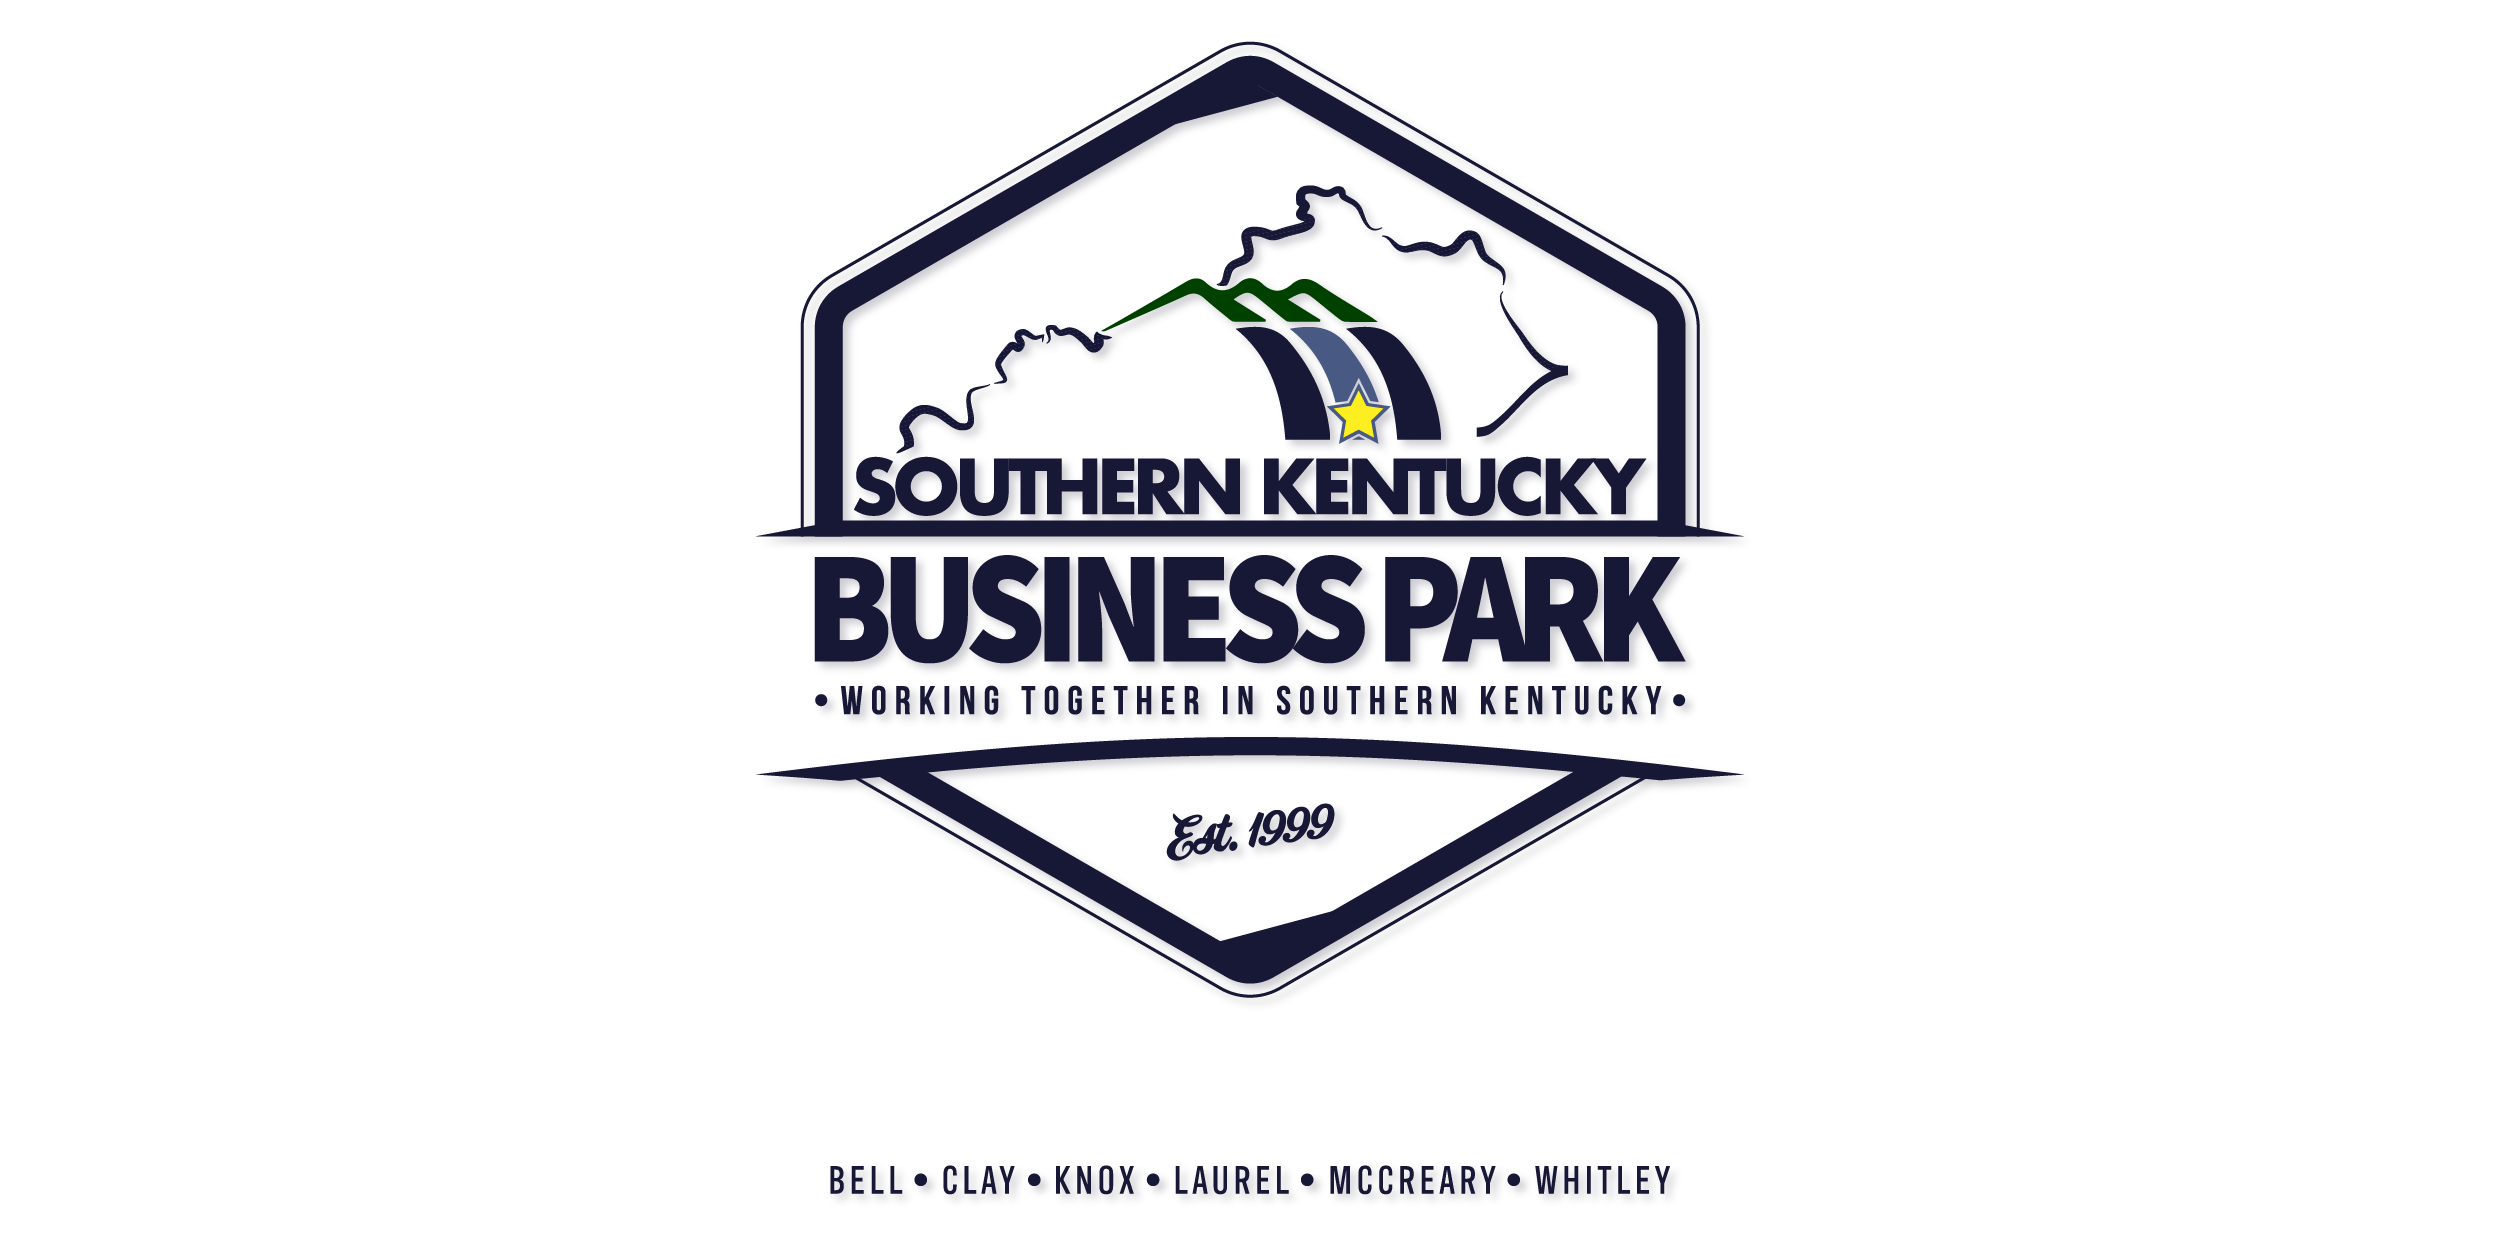 Southern Kentucky Business Park logo 2021